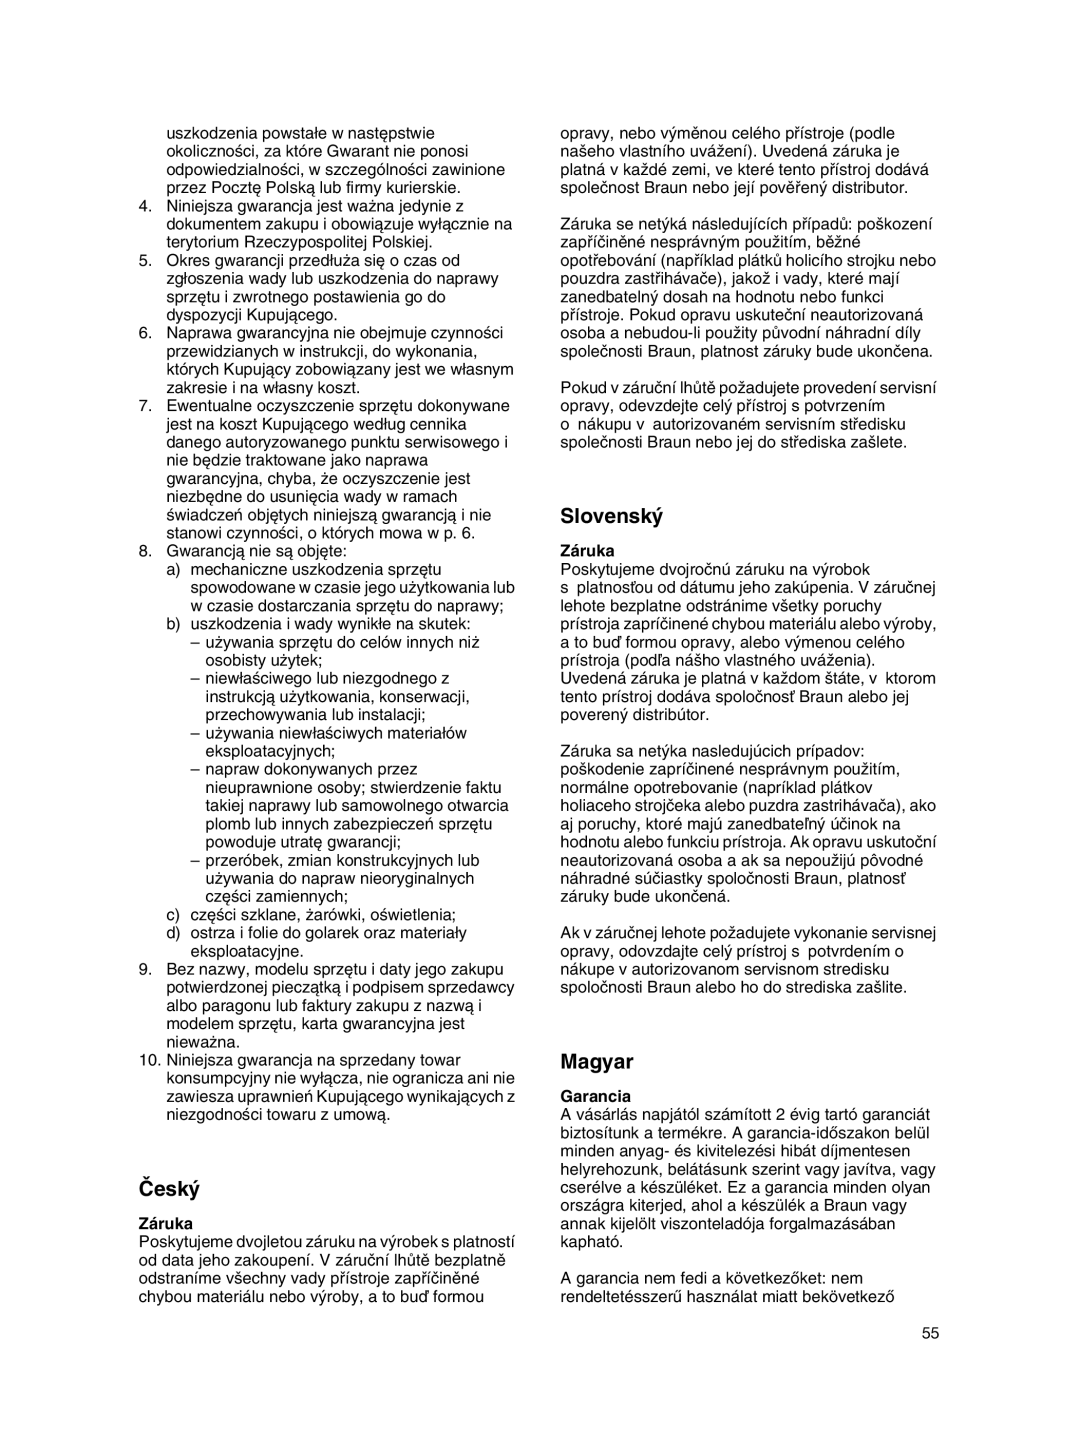 Braun MX 2050 BLACK manual âesk˘, Slovensk˘, Magyar, Záruka, Garancia 